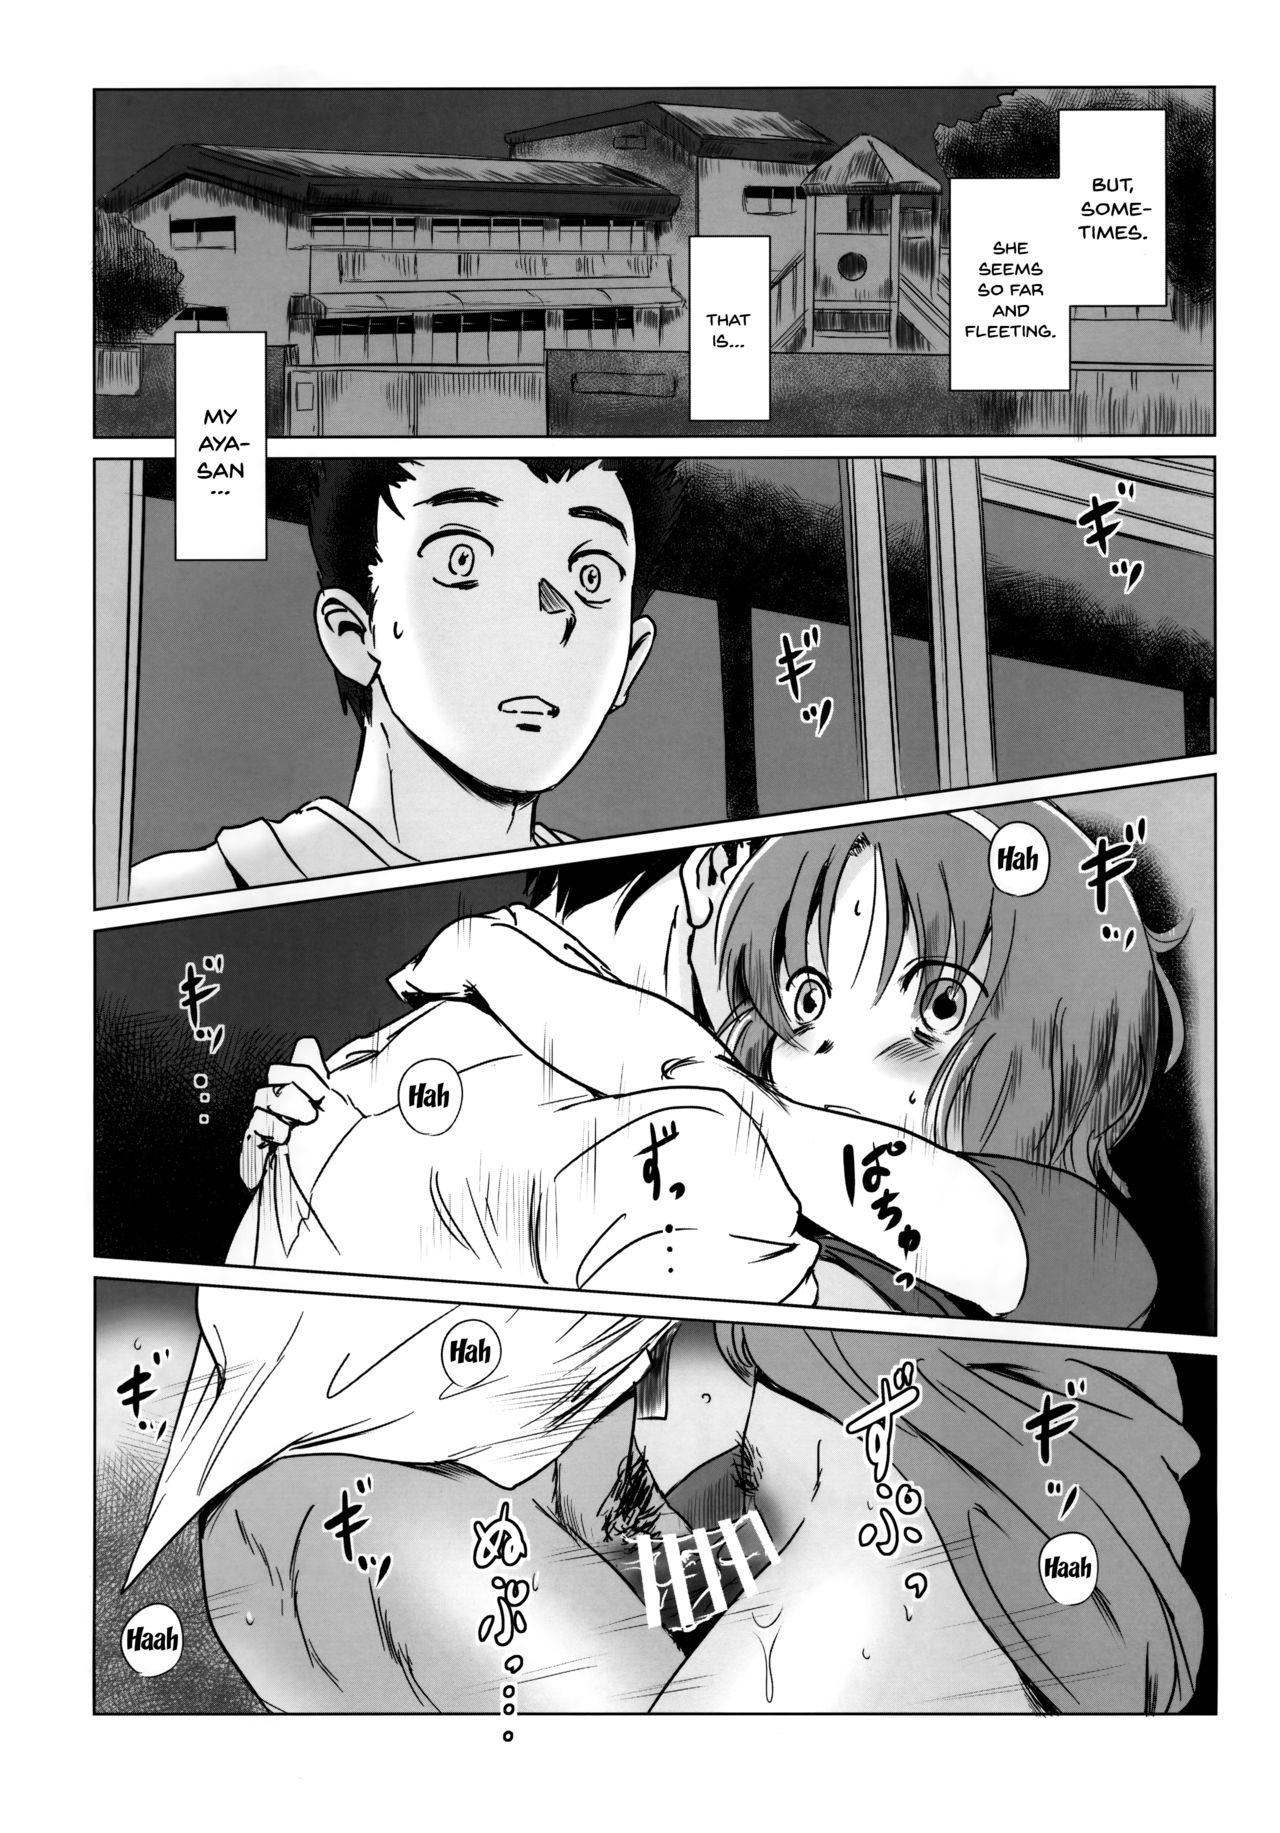 Peluda Story of the 'N' Situation - Situation#1 Kyouhaku - Original Gayporn - Page 3